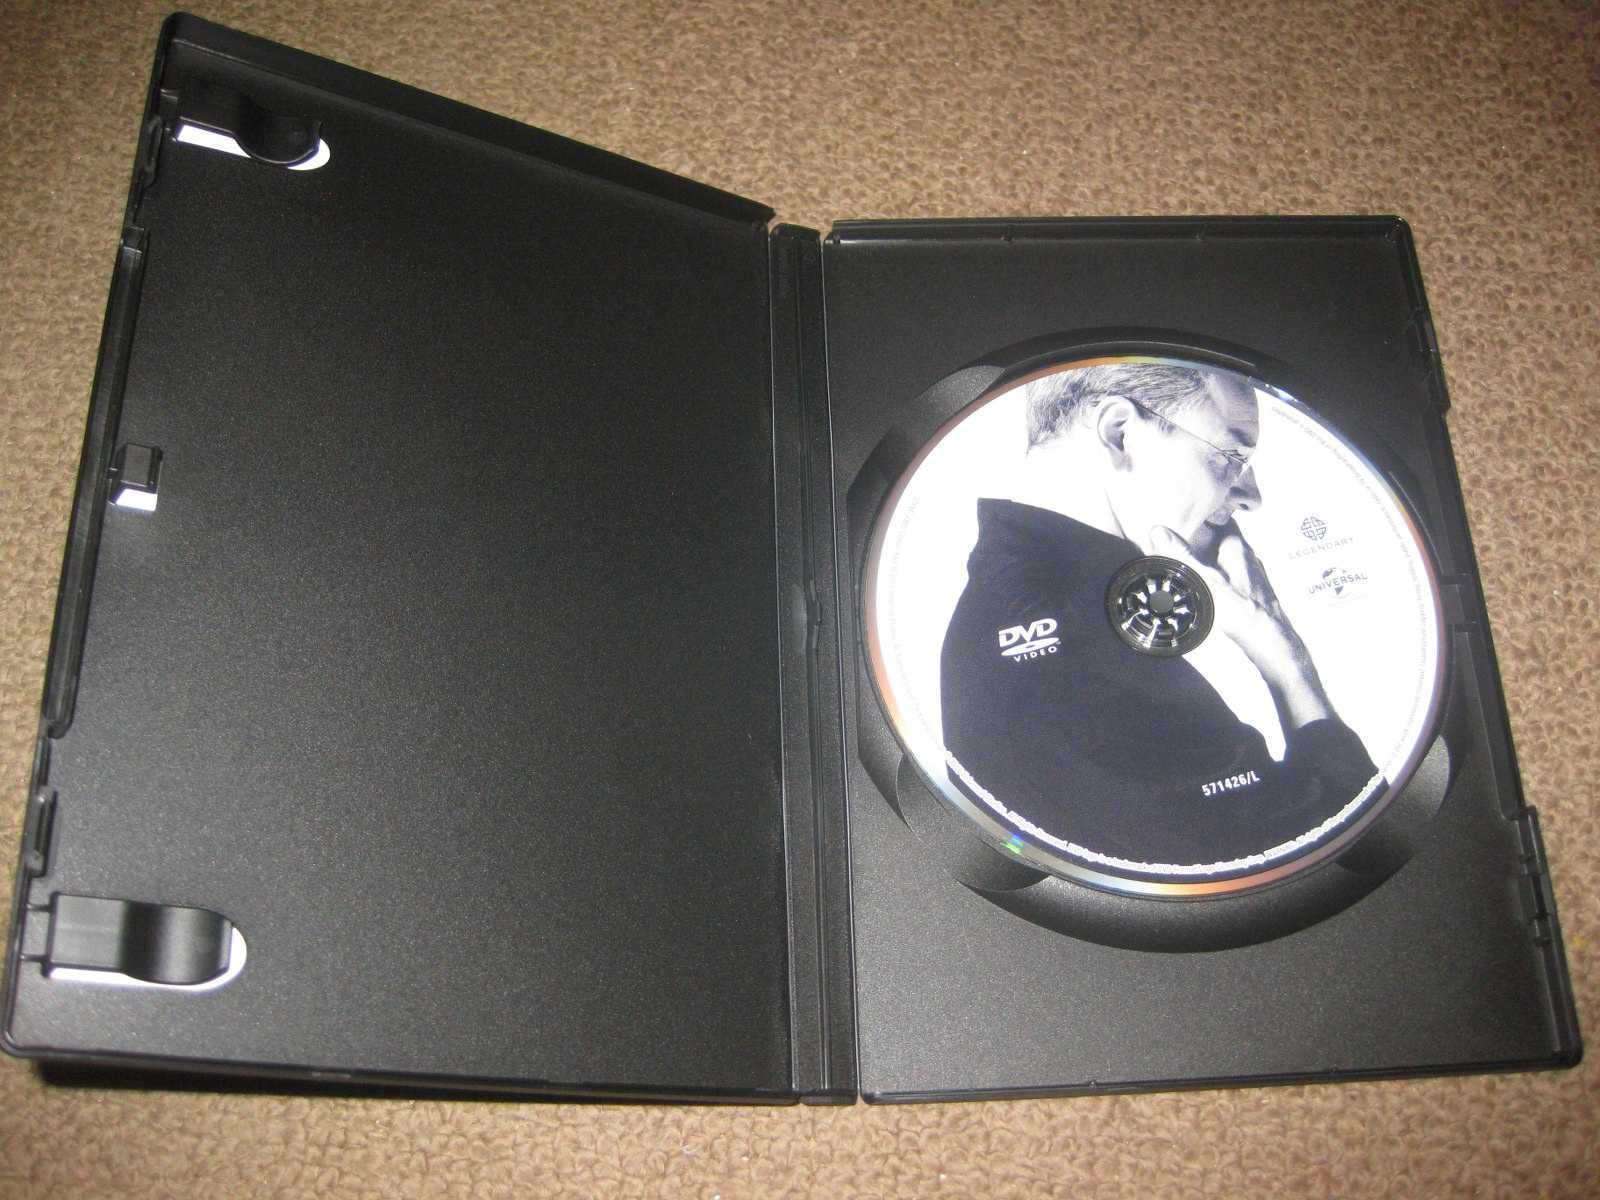 DVD "Steve Jobs" com Michael Fassbender